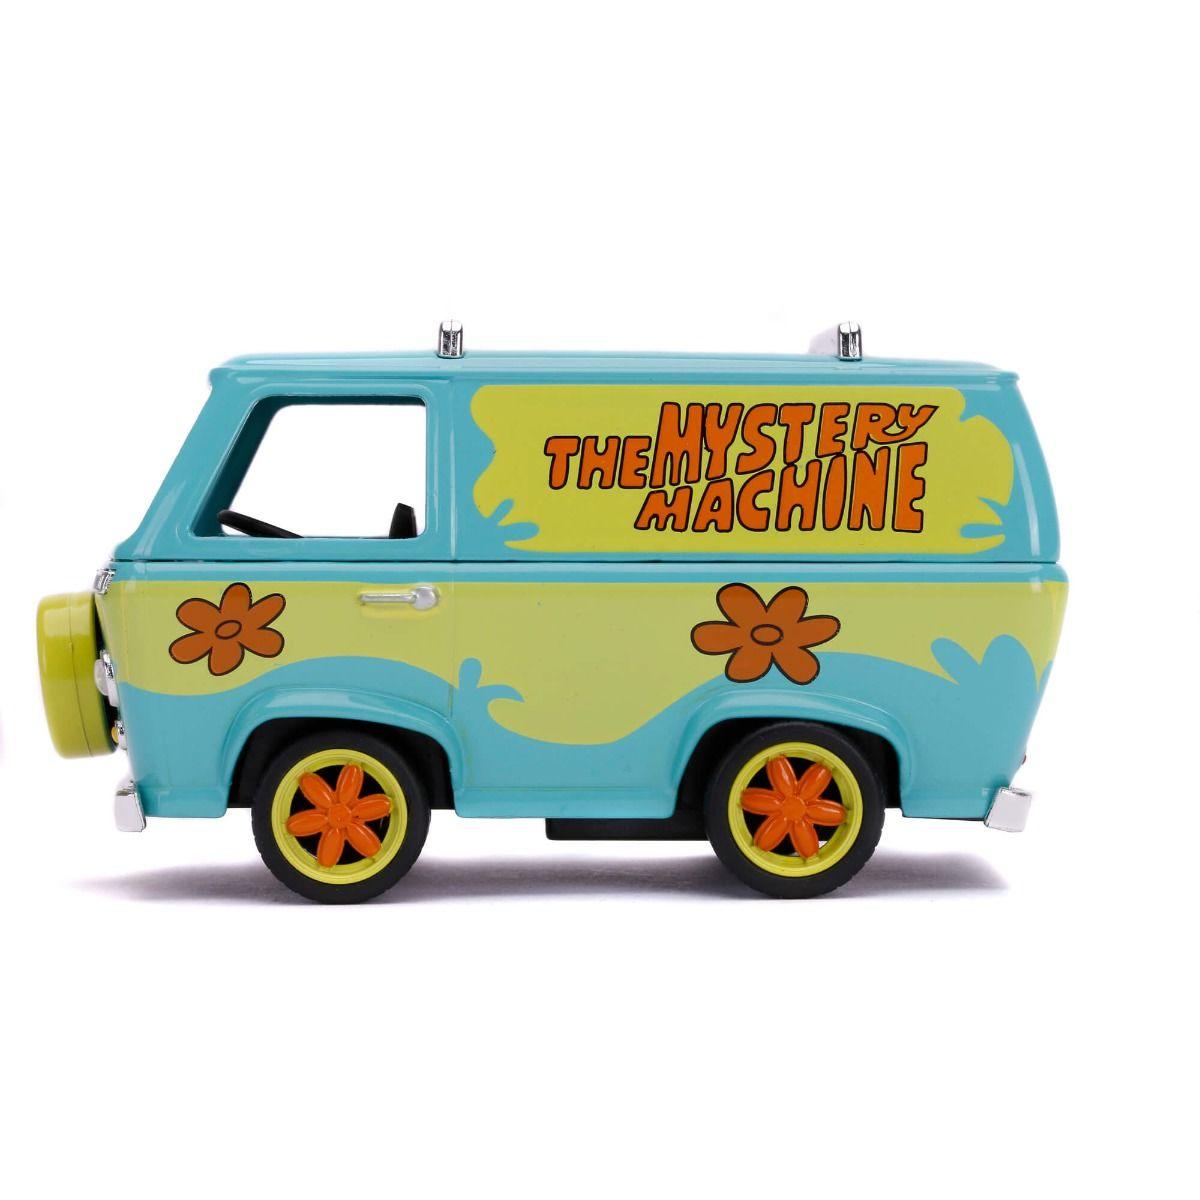 JAD32040 Scooby Doo - Mystery Machine 1:32 Scale Hollywood Ride - Jada Toys - Titan Pop Culture